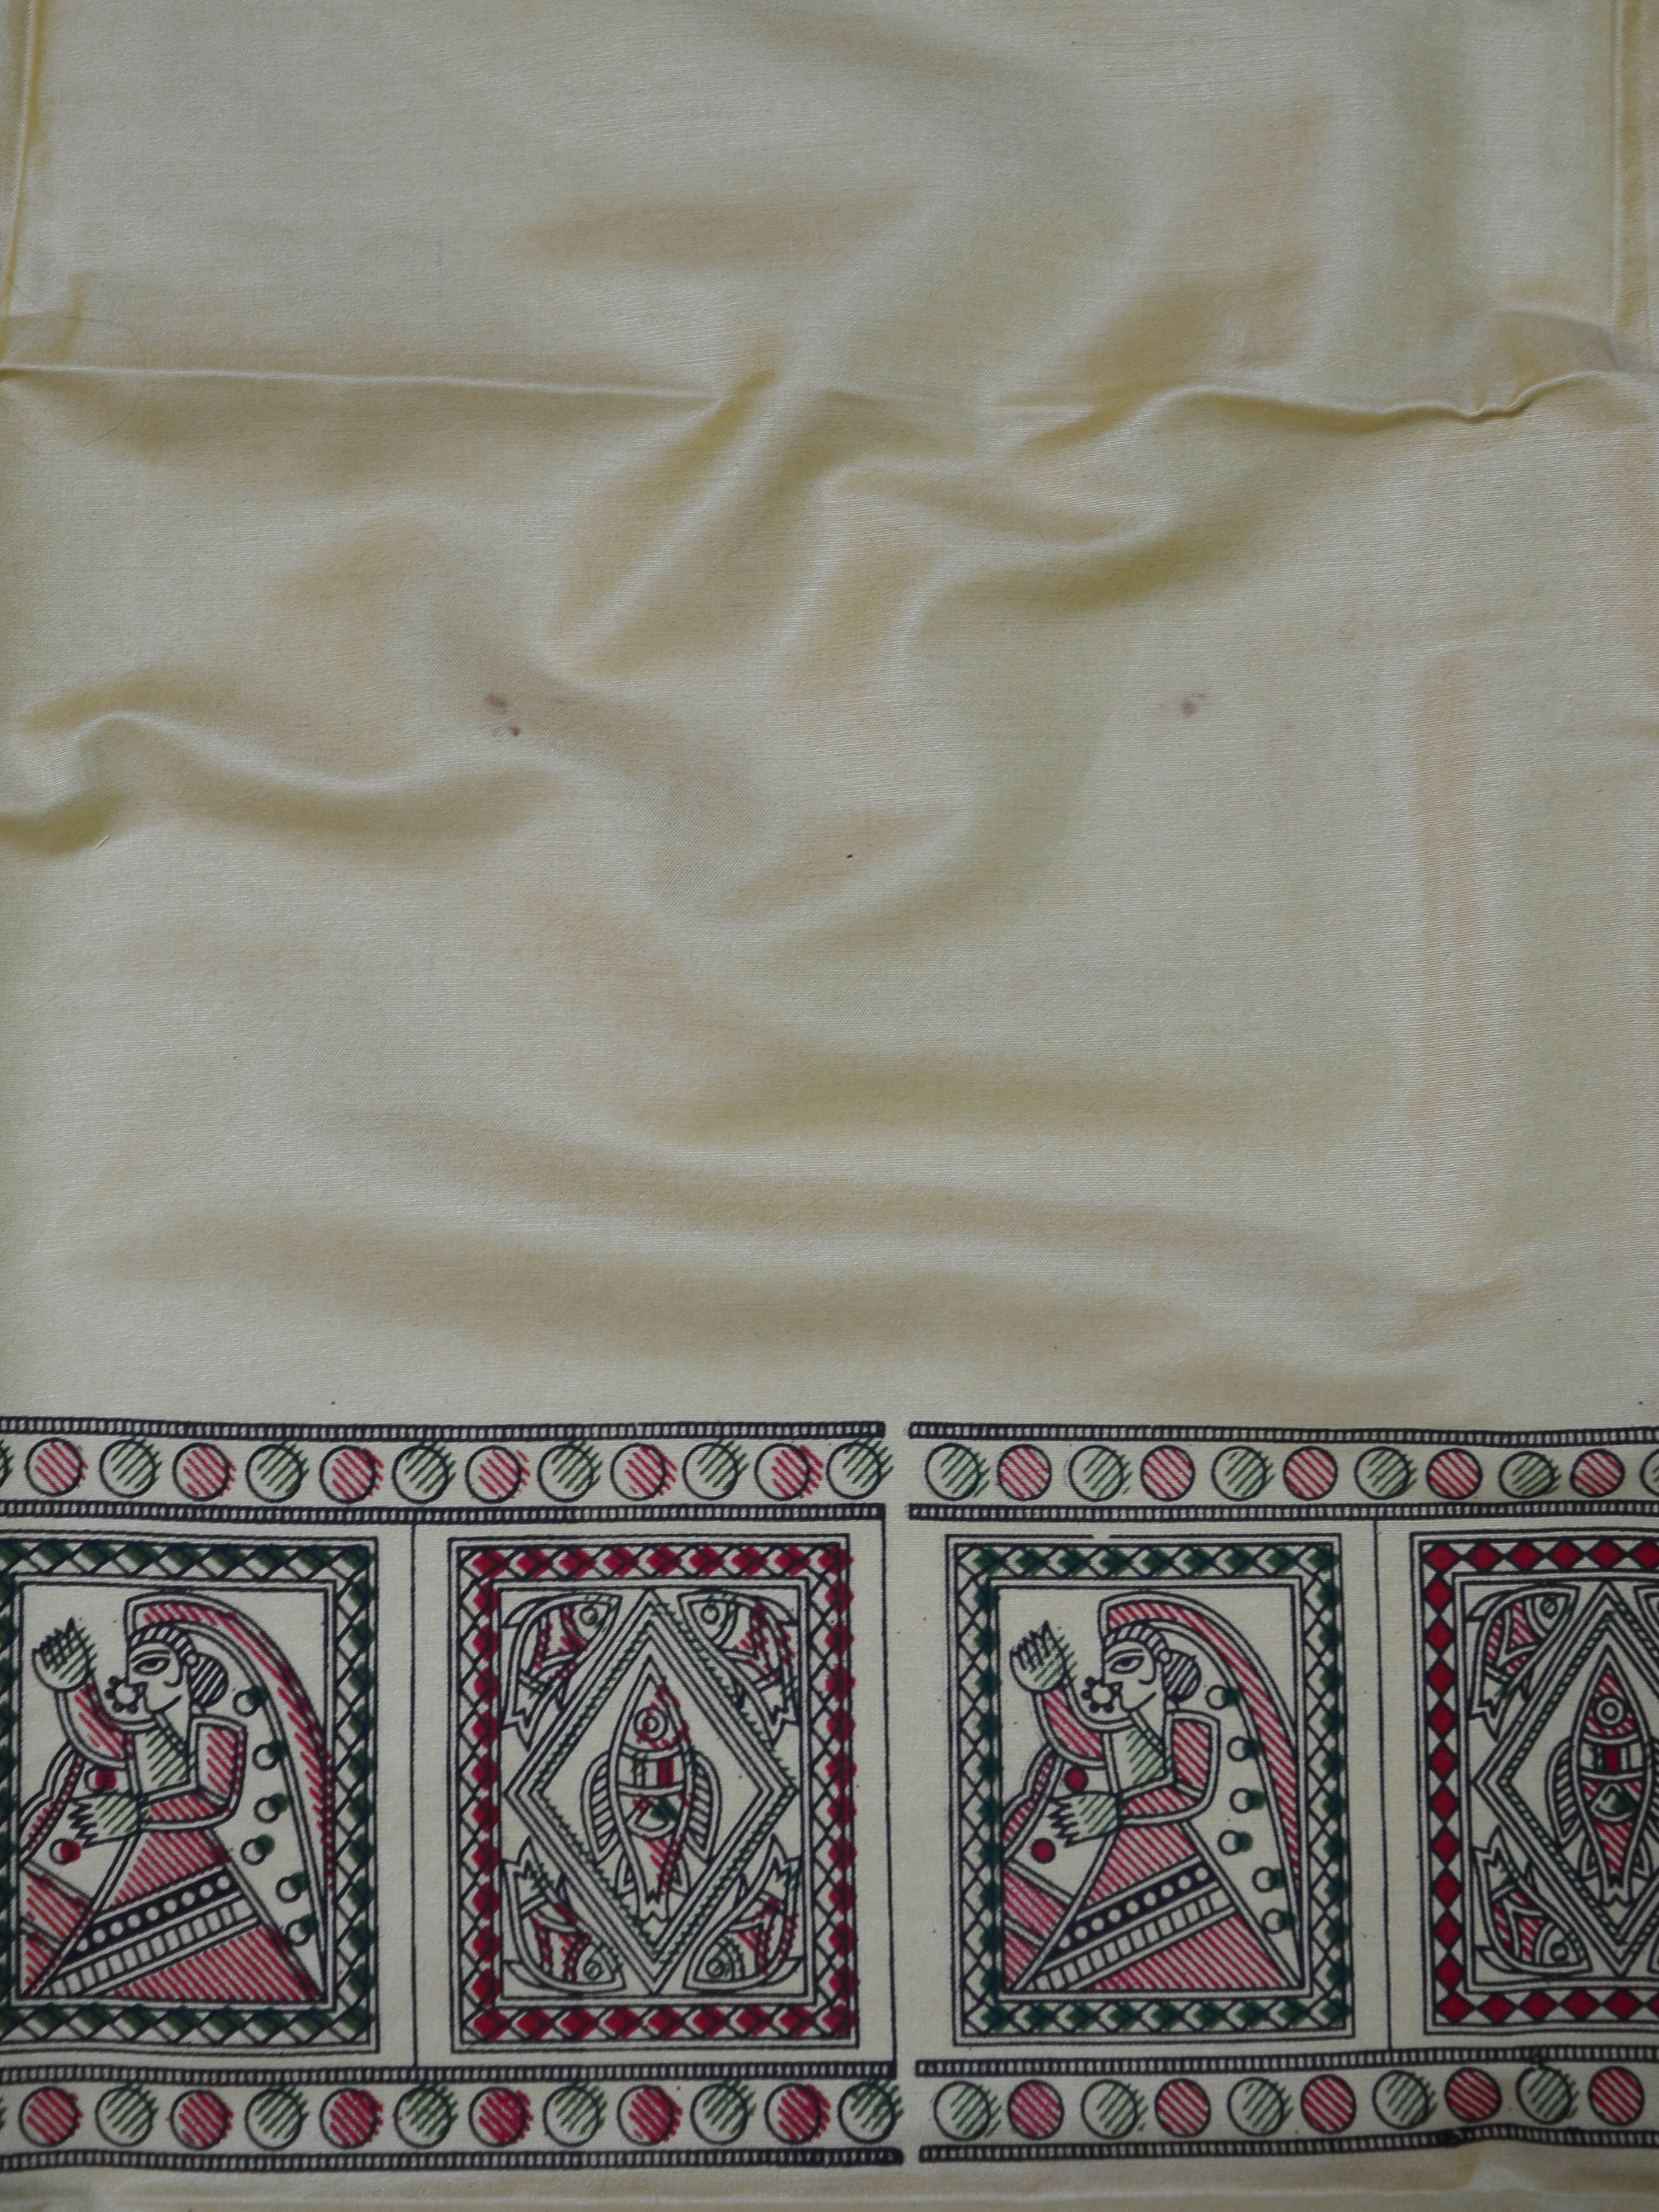 Pure Handloom Khadi Cotton Madhubani Print Salwar Kameez Dupatta Set-Yellow